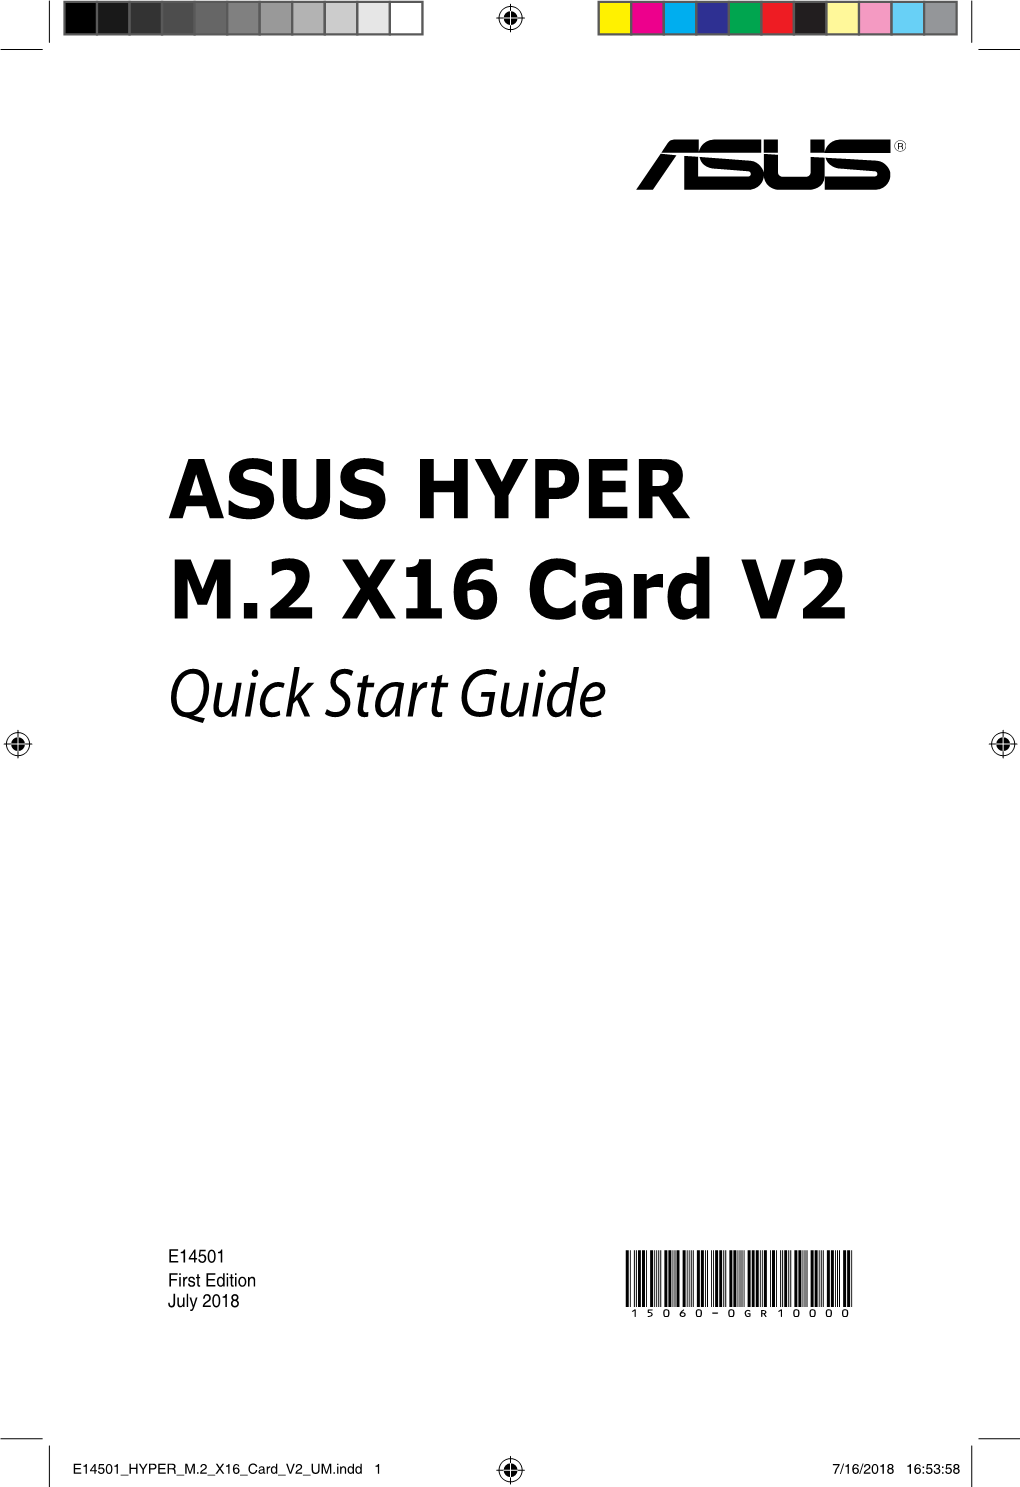 ASUS HYPER M.2 X16 Card V2 Quick Start Guide